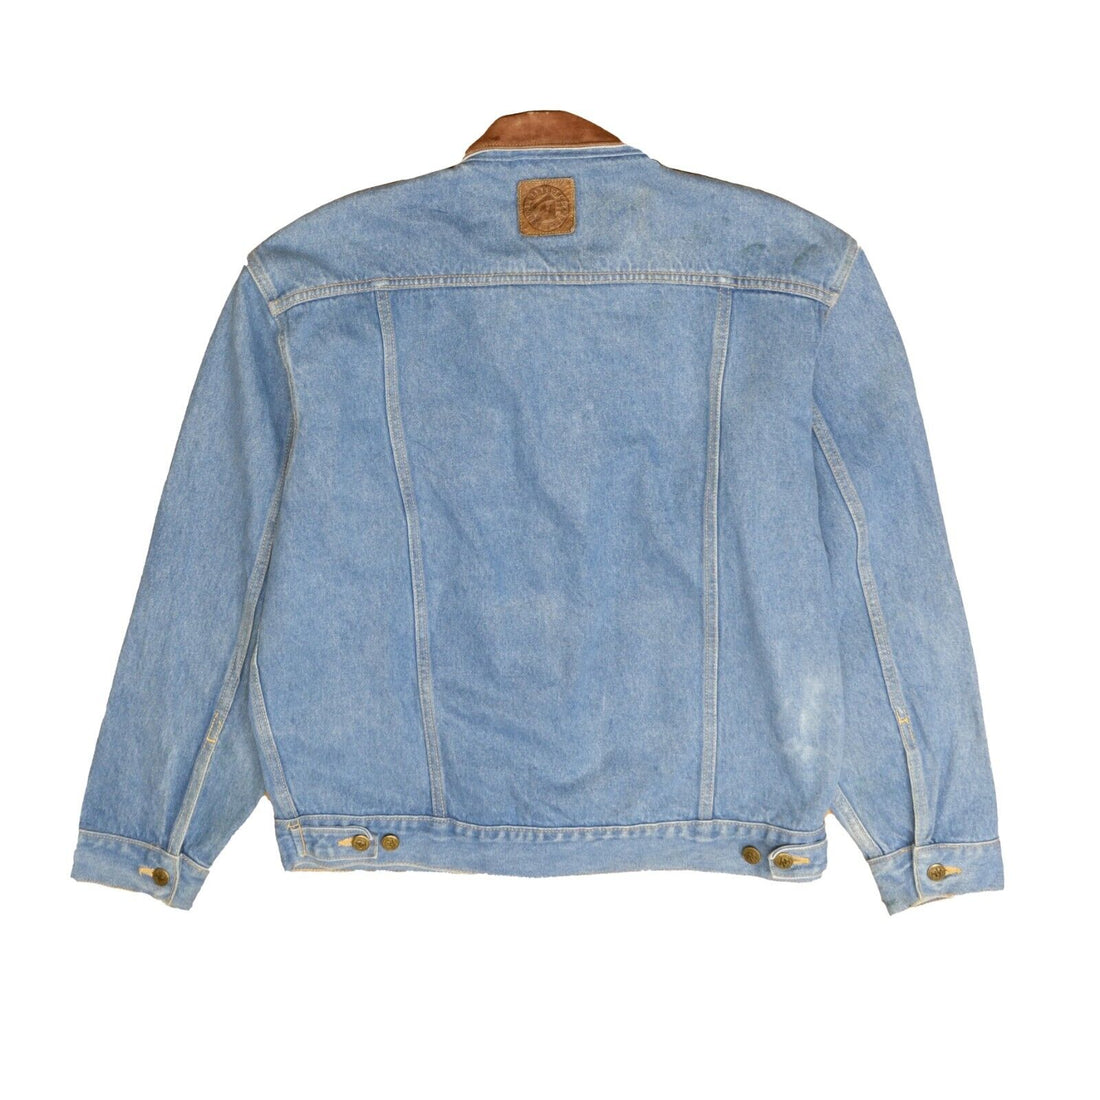 Vintage Marlboro Country Store Denim Jacket Size Medium Blue Leather Trim 90s